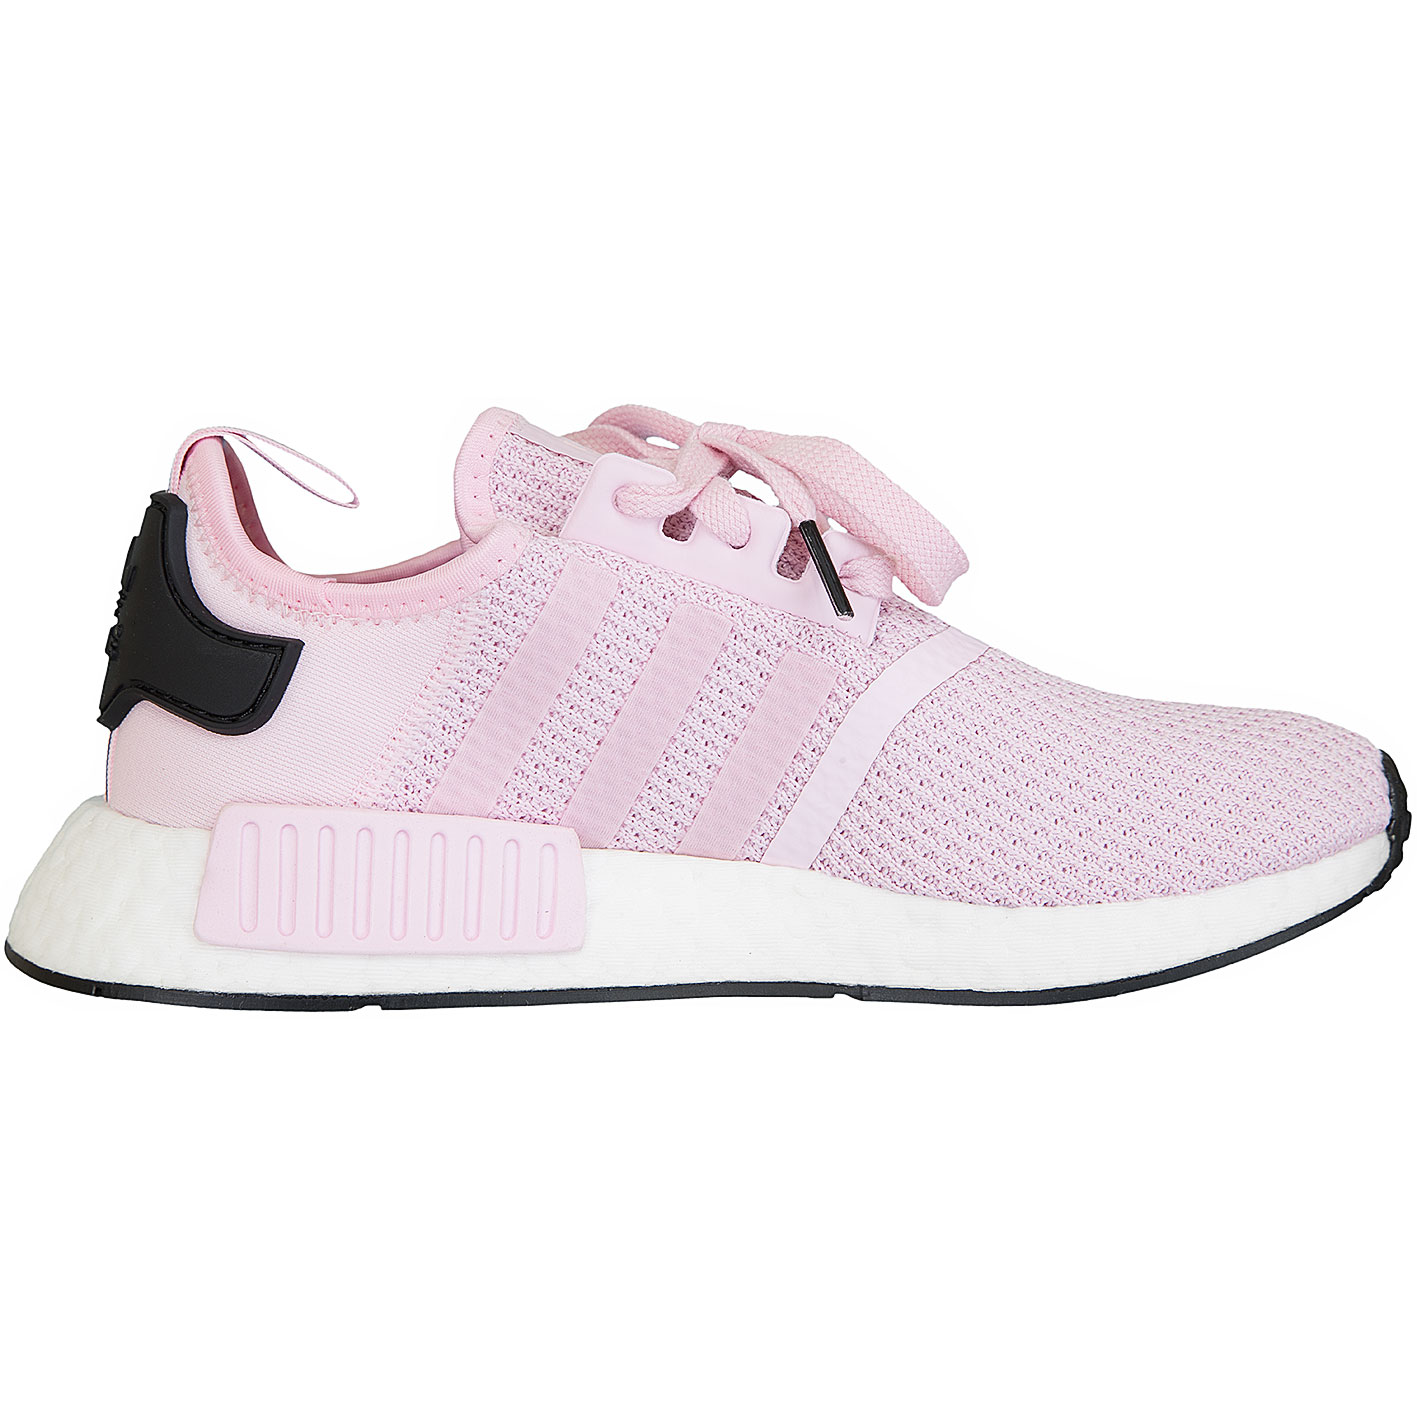 Adidas Originals Damen Sneaker NMD R1 pink  hier bestellen 